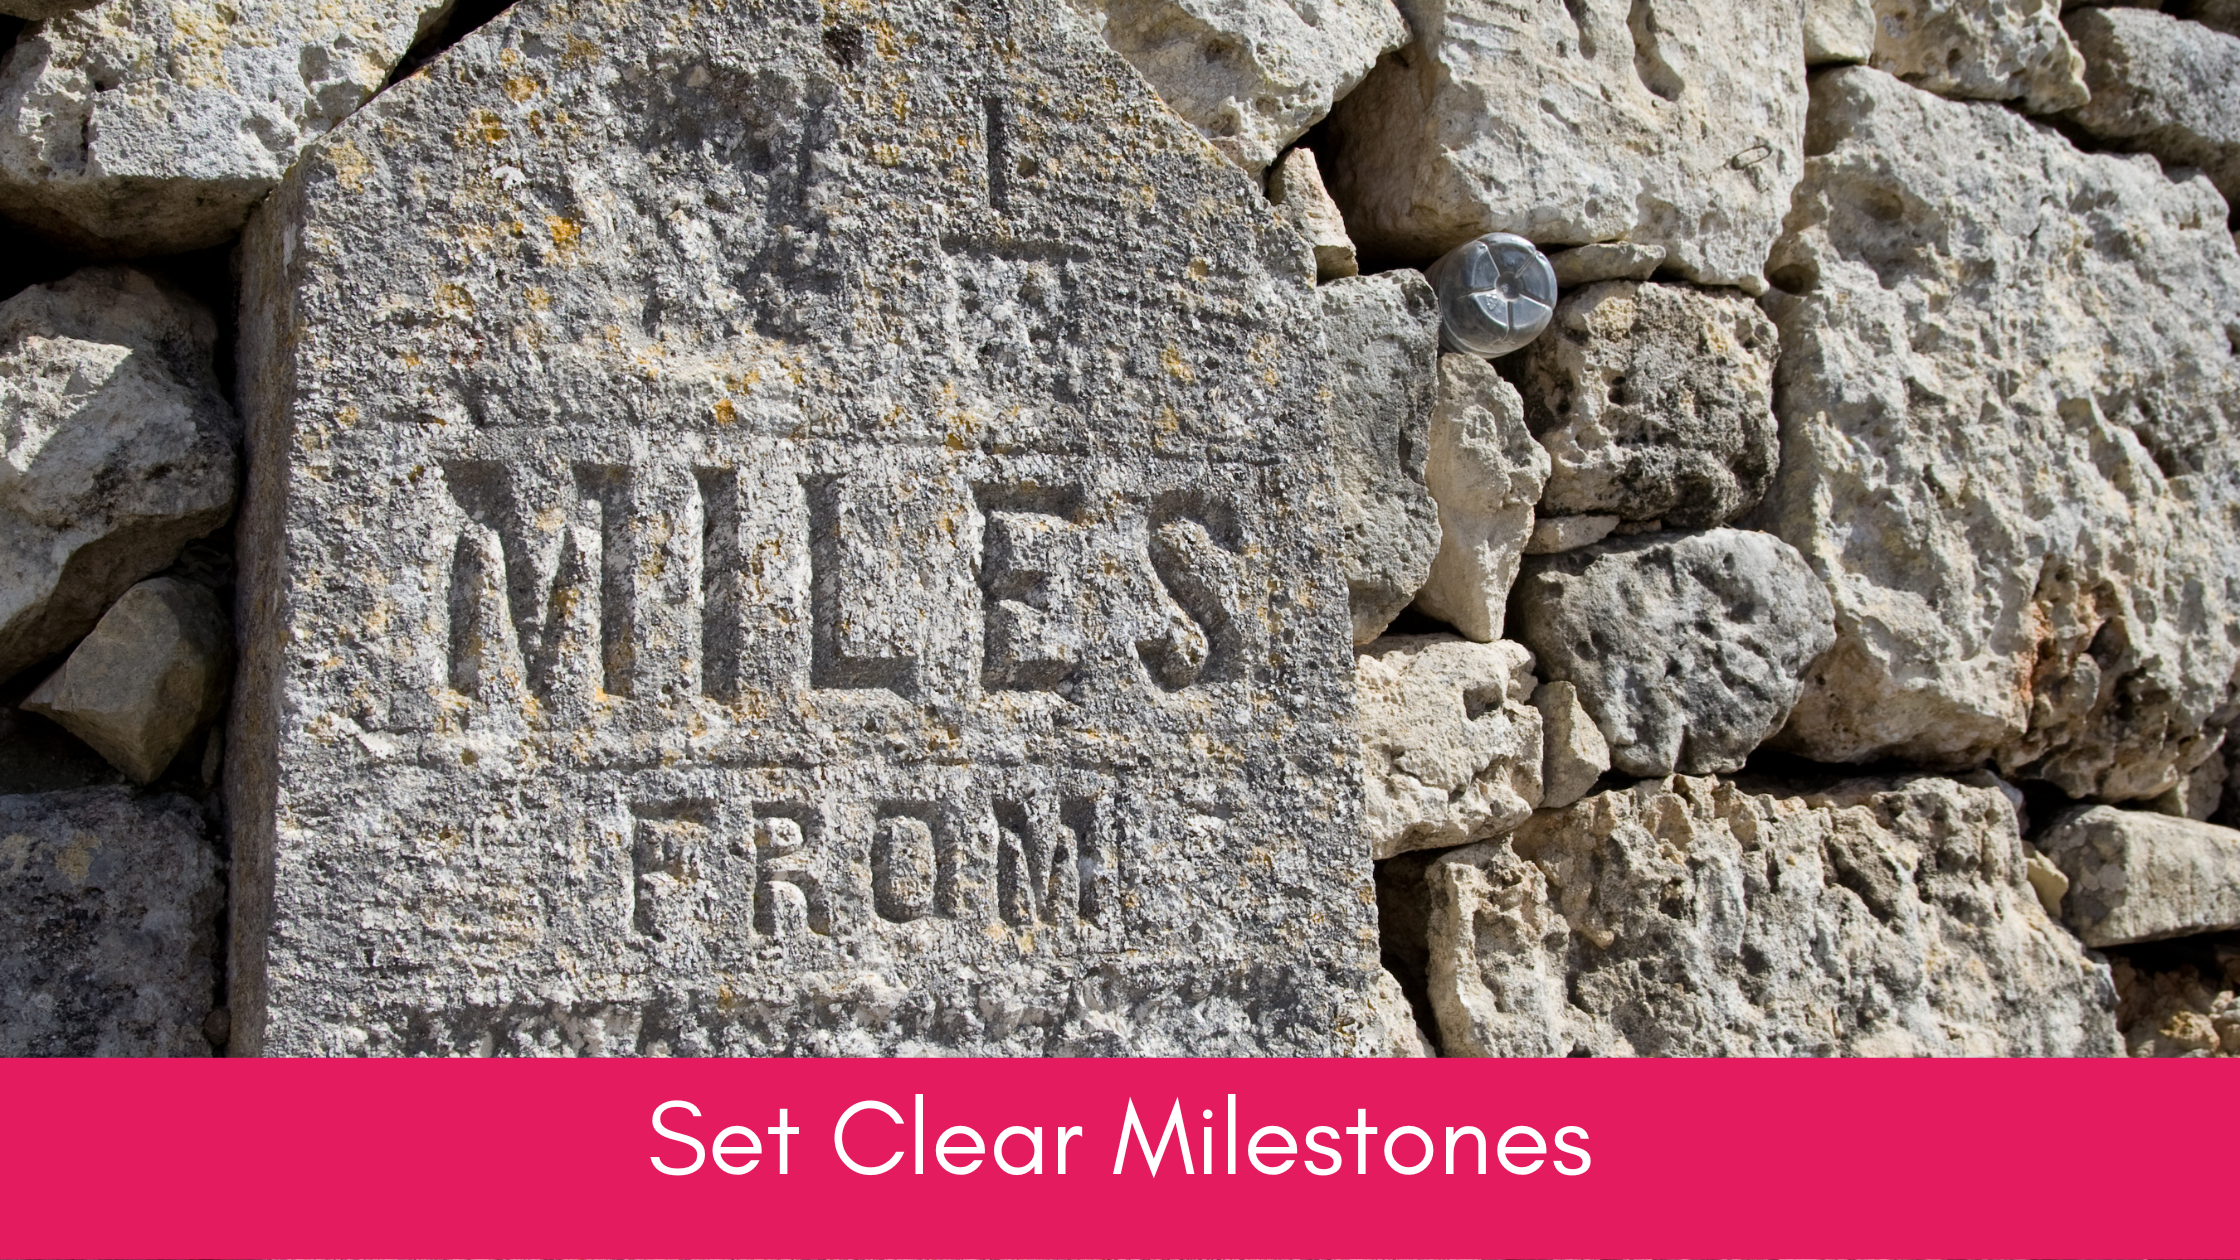 Set clear milestones